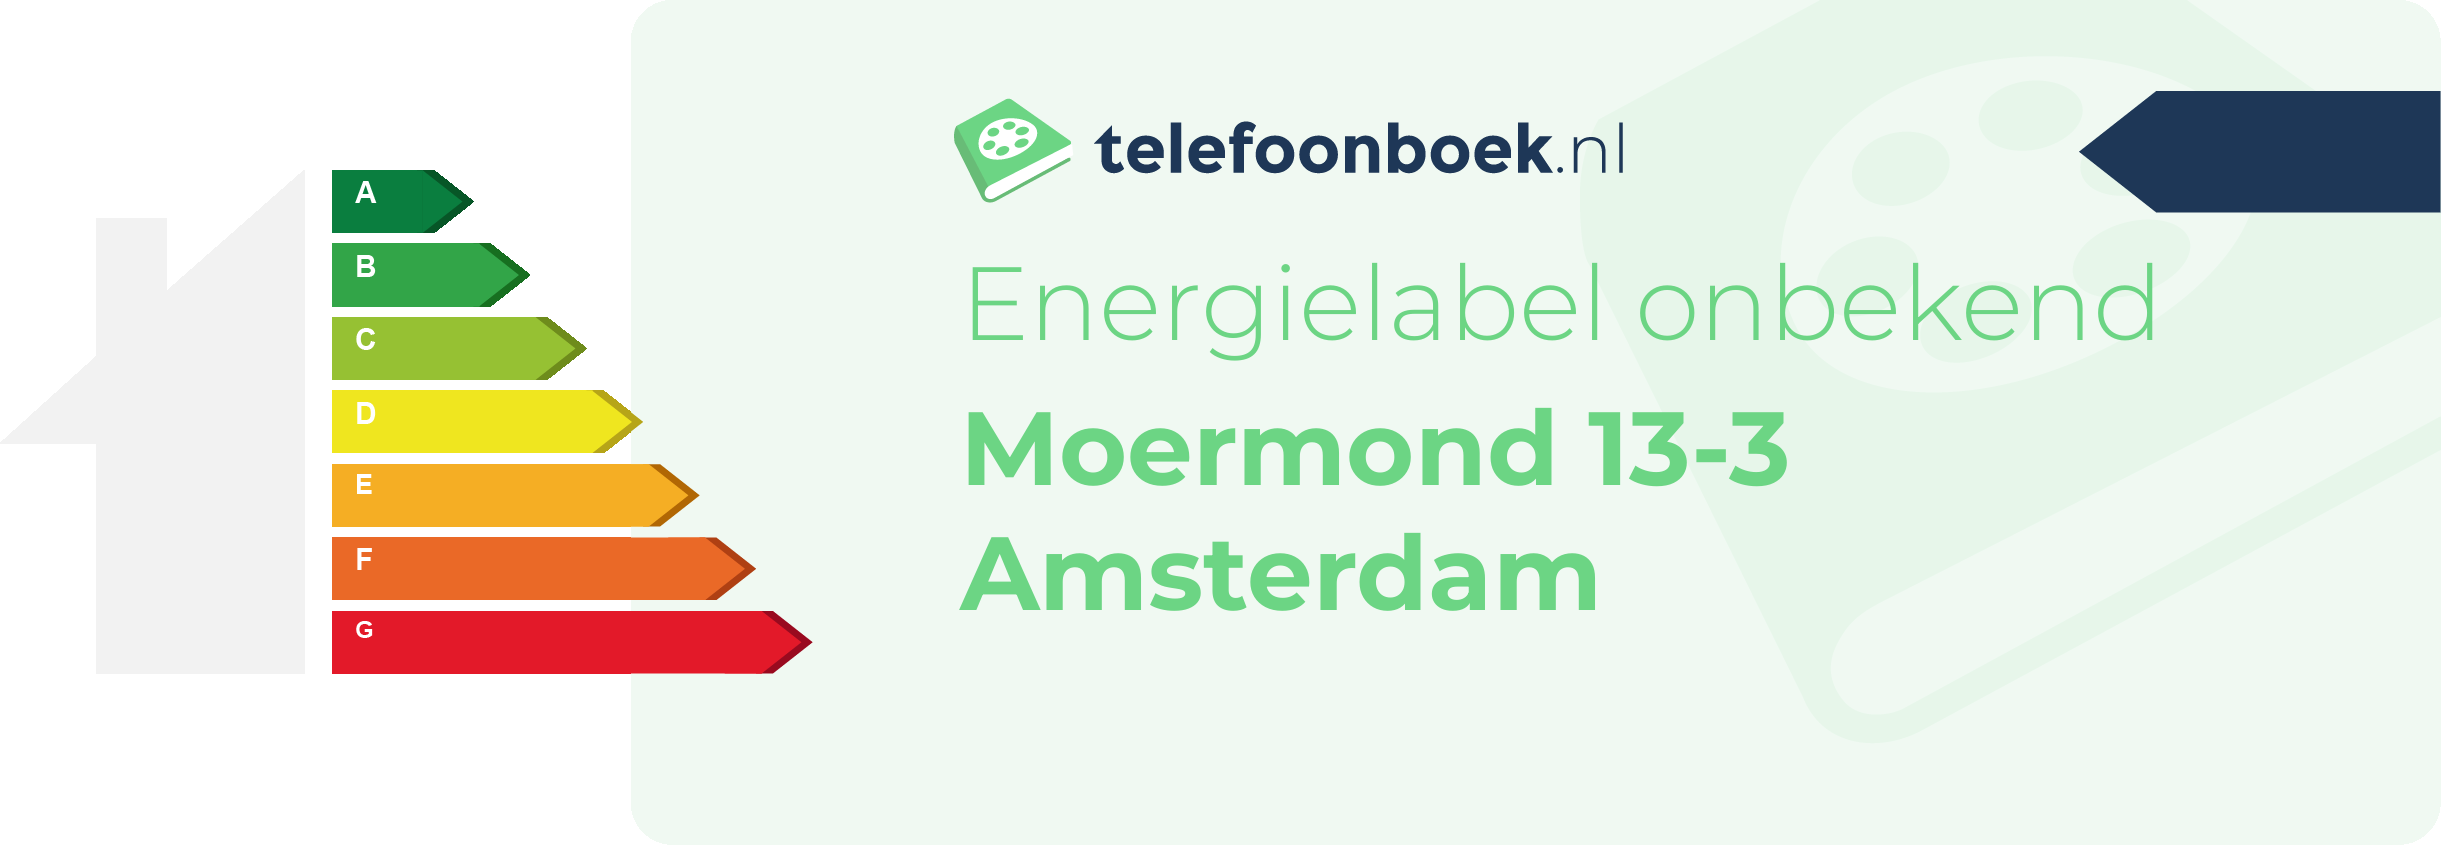 Energielabel Moermond 13-3 Amsterdam